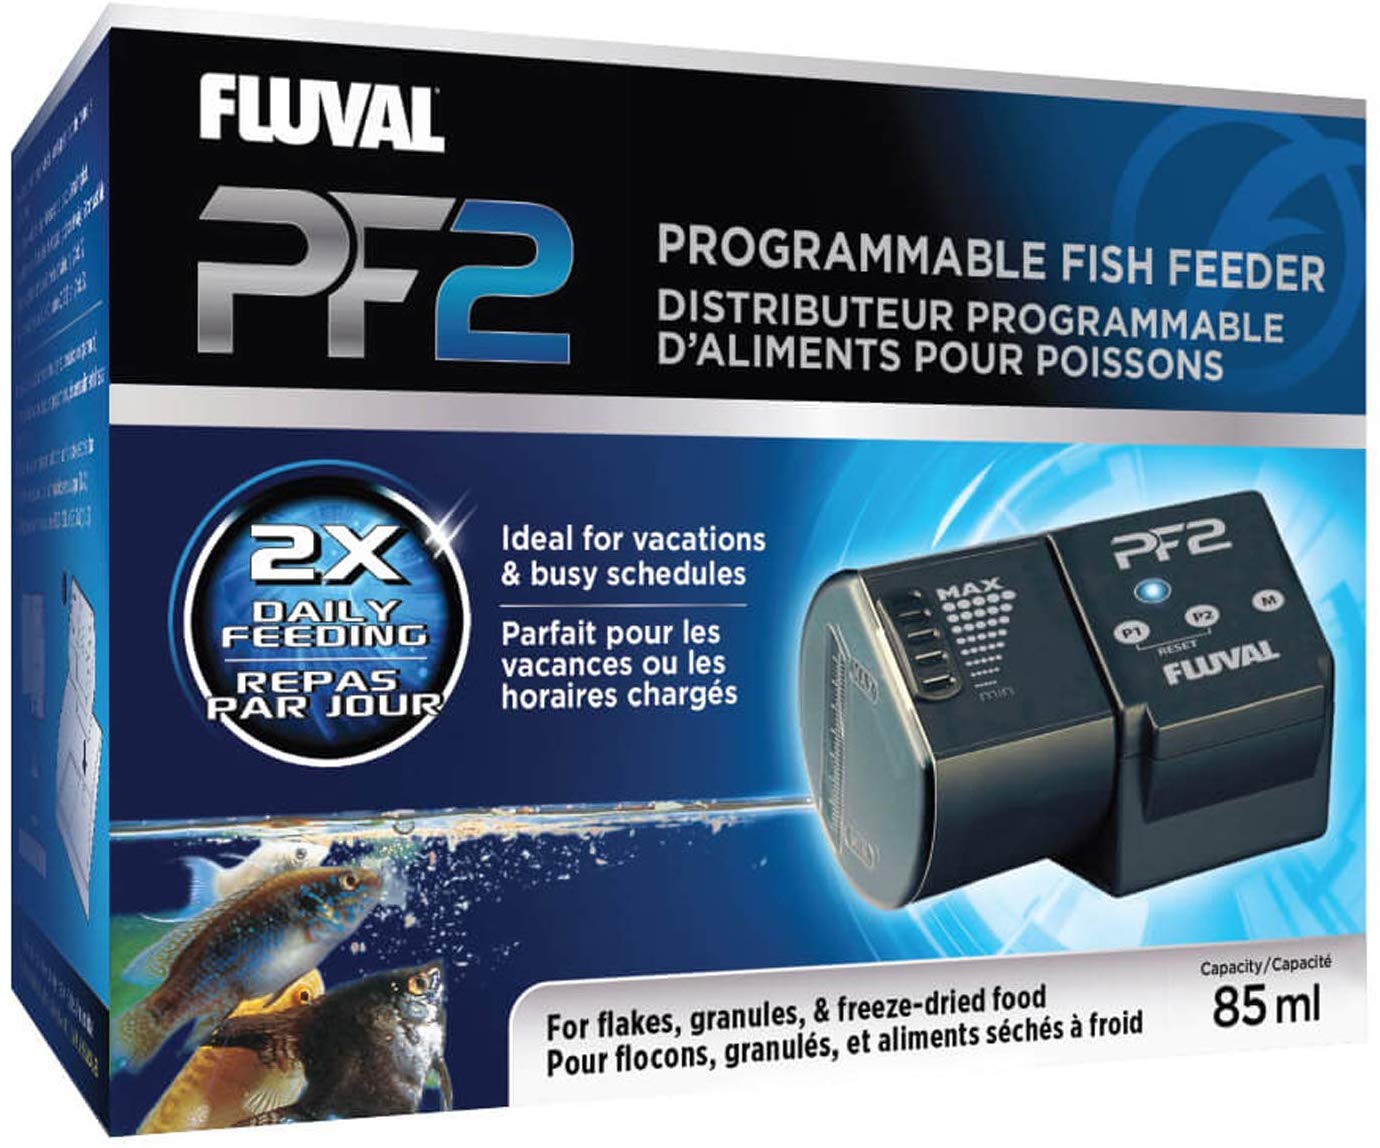 Fluval PF2 Programmable Fish Feeder